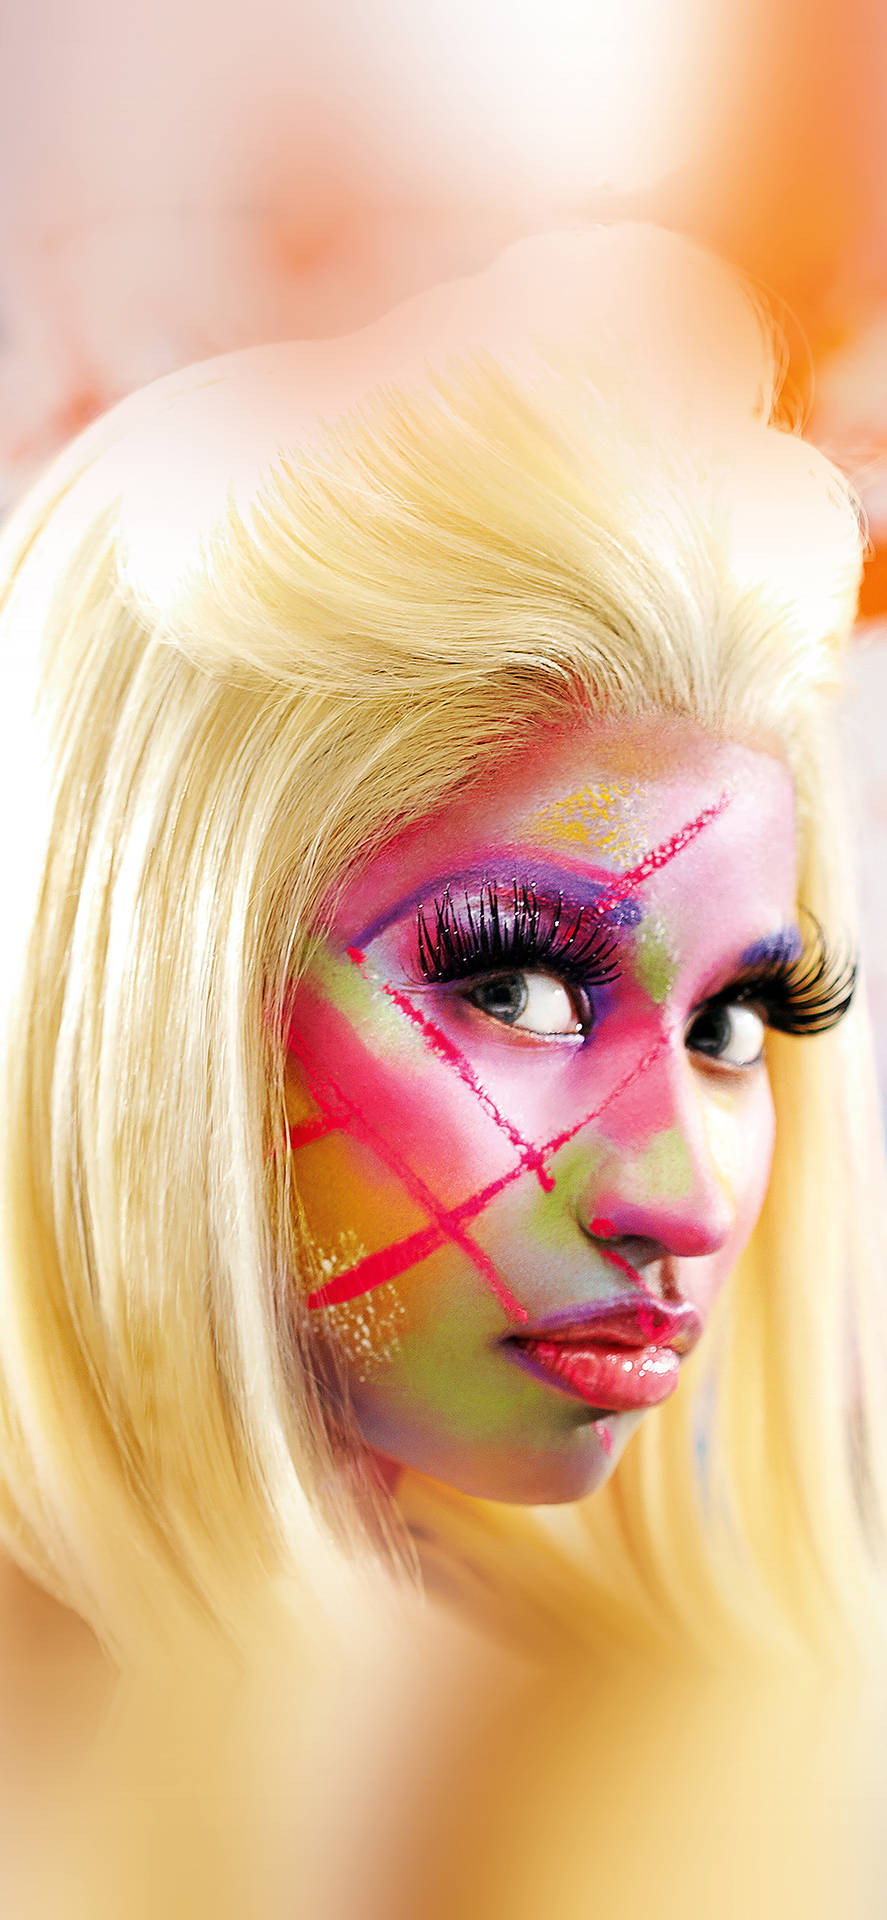 Nicki Minaj With Face Paint Wallpaper